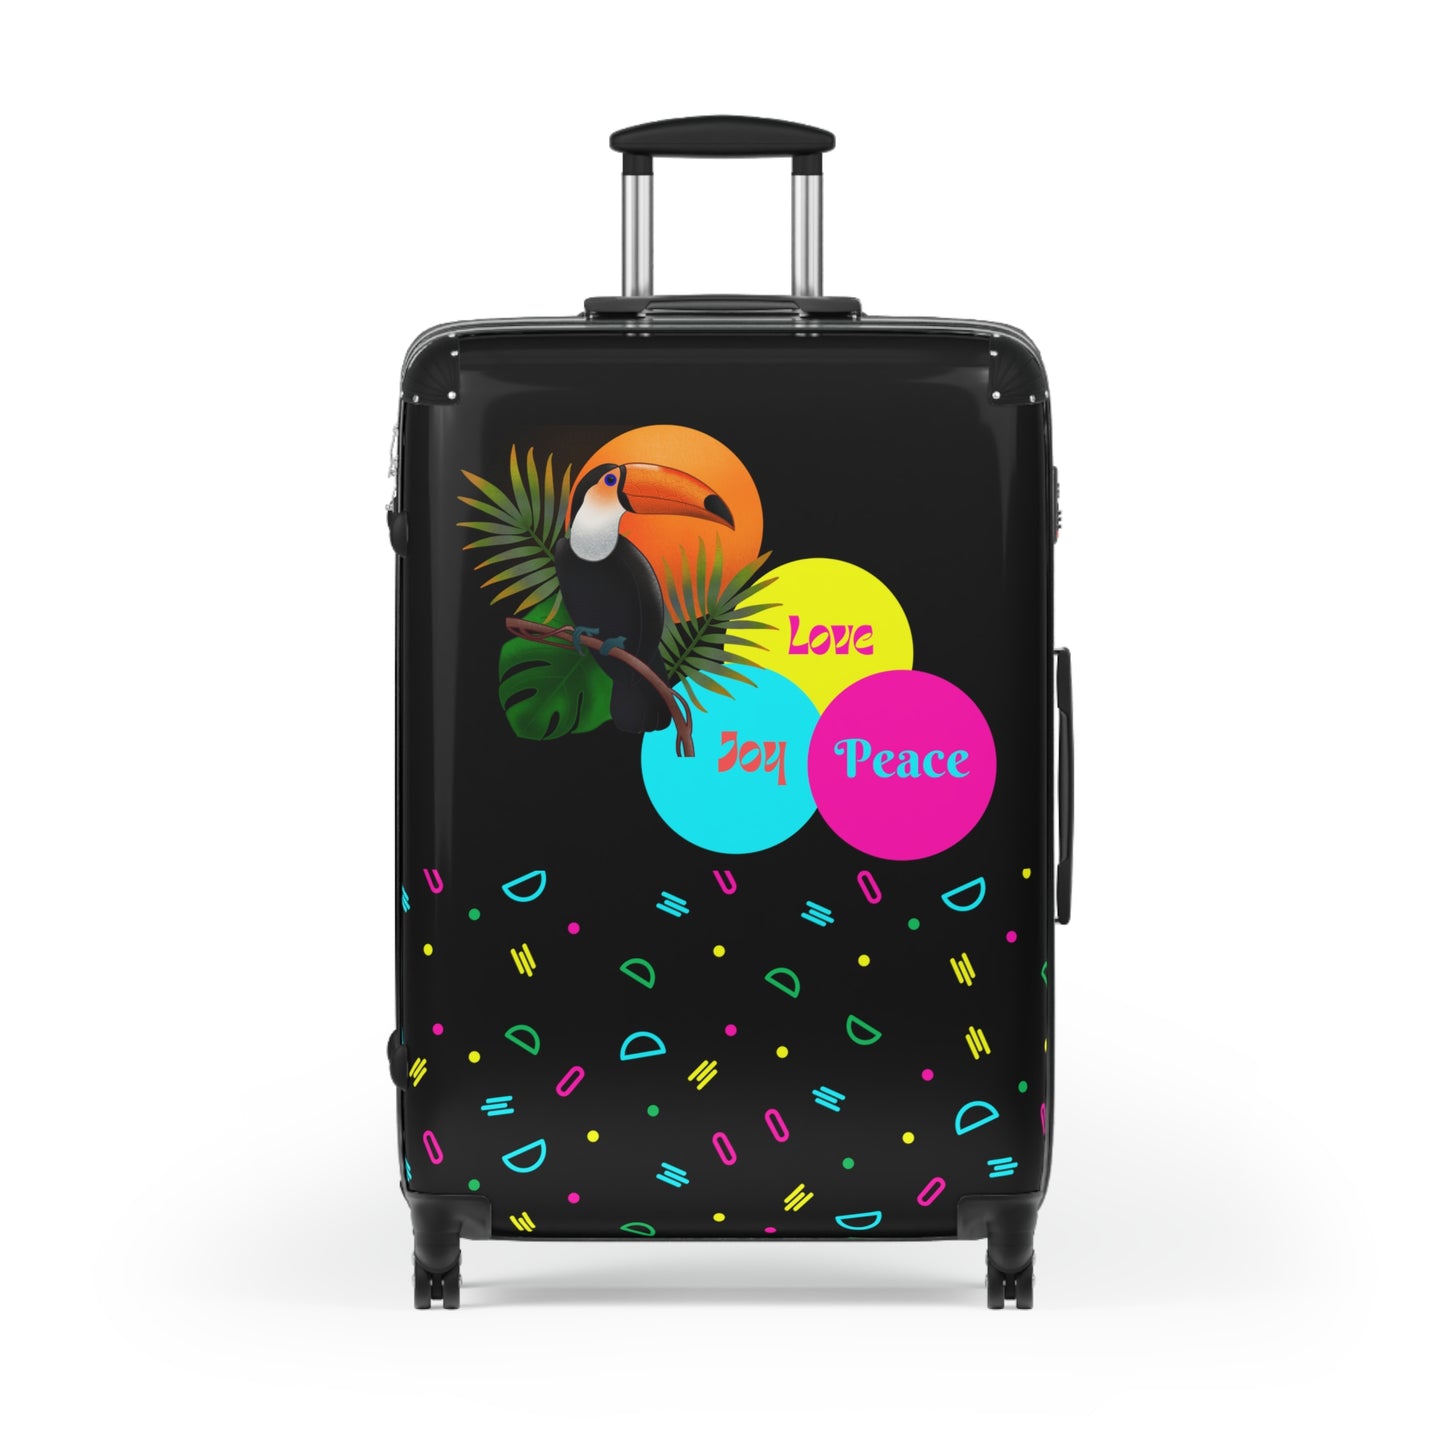 Inspirational Luggage, Holidays Suitcase,  Positive Hard Shell Trolley